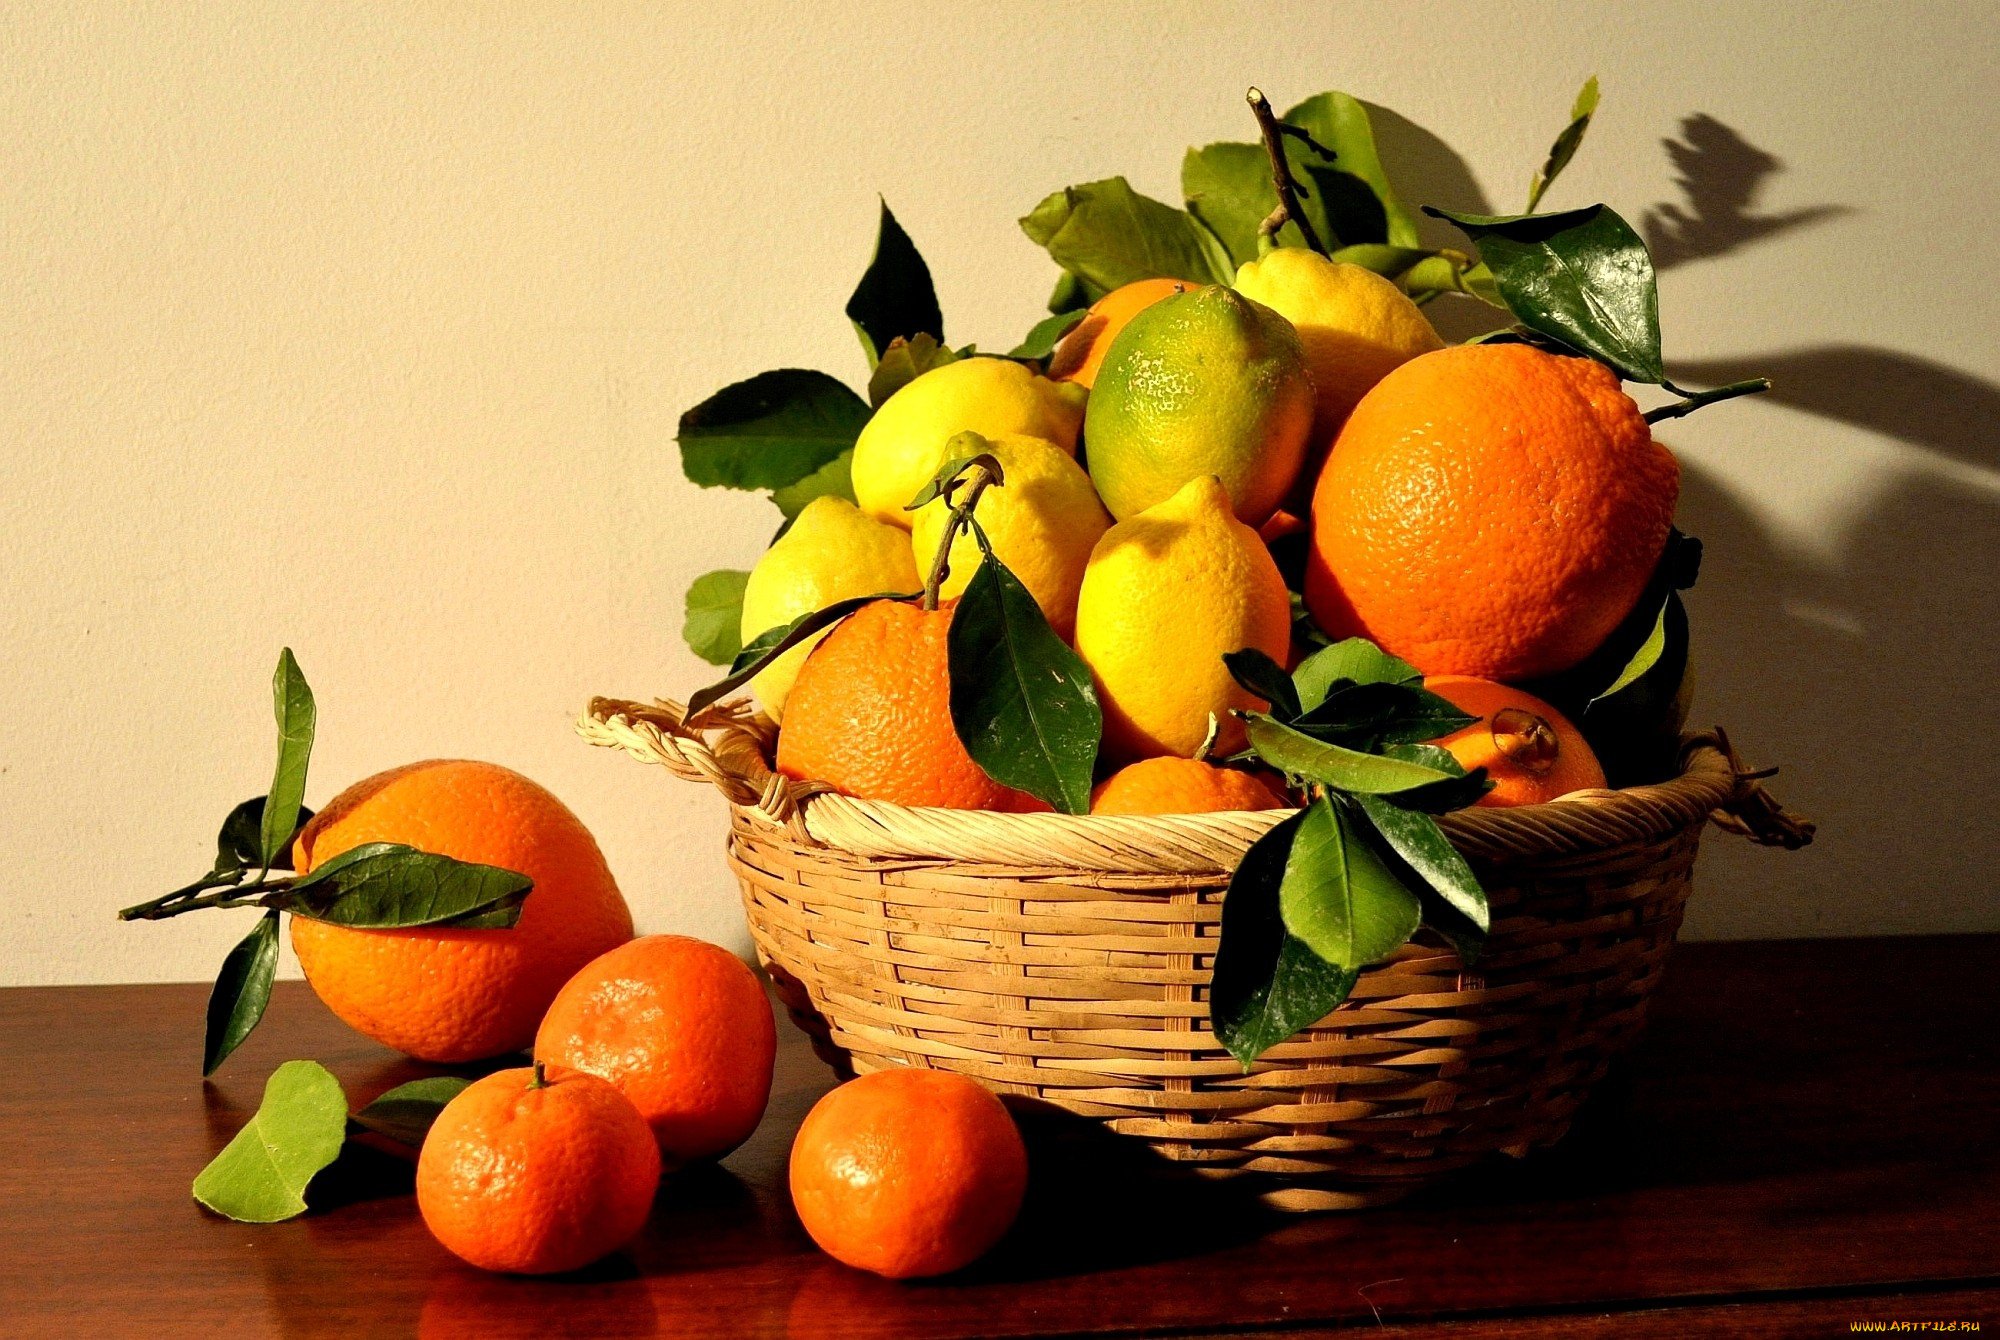 День апельсина и лимона картинки. Мандарин померанец. Натюрморт с фруктами. Апельсин и мандарин. Корзинка с мандаринами.